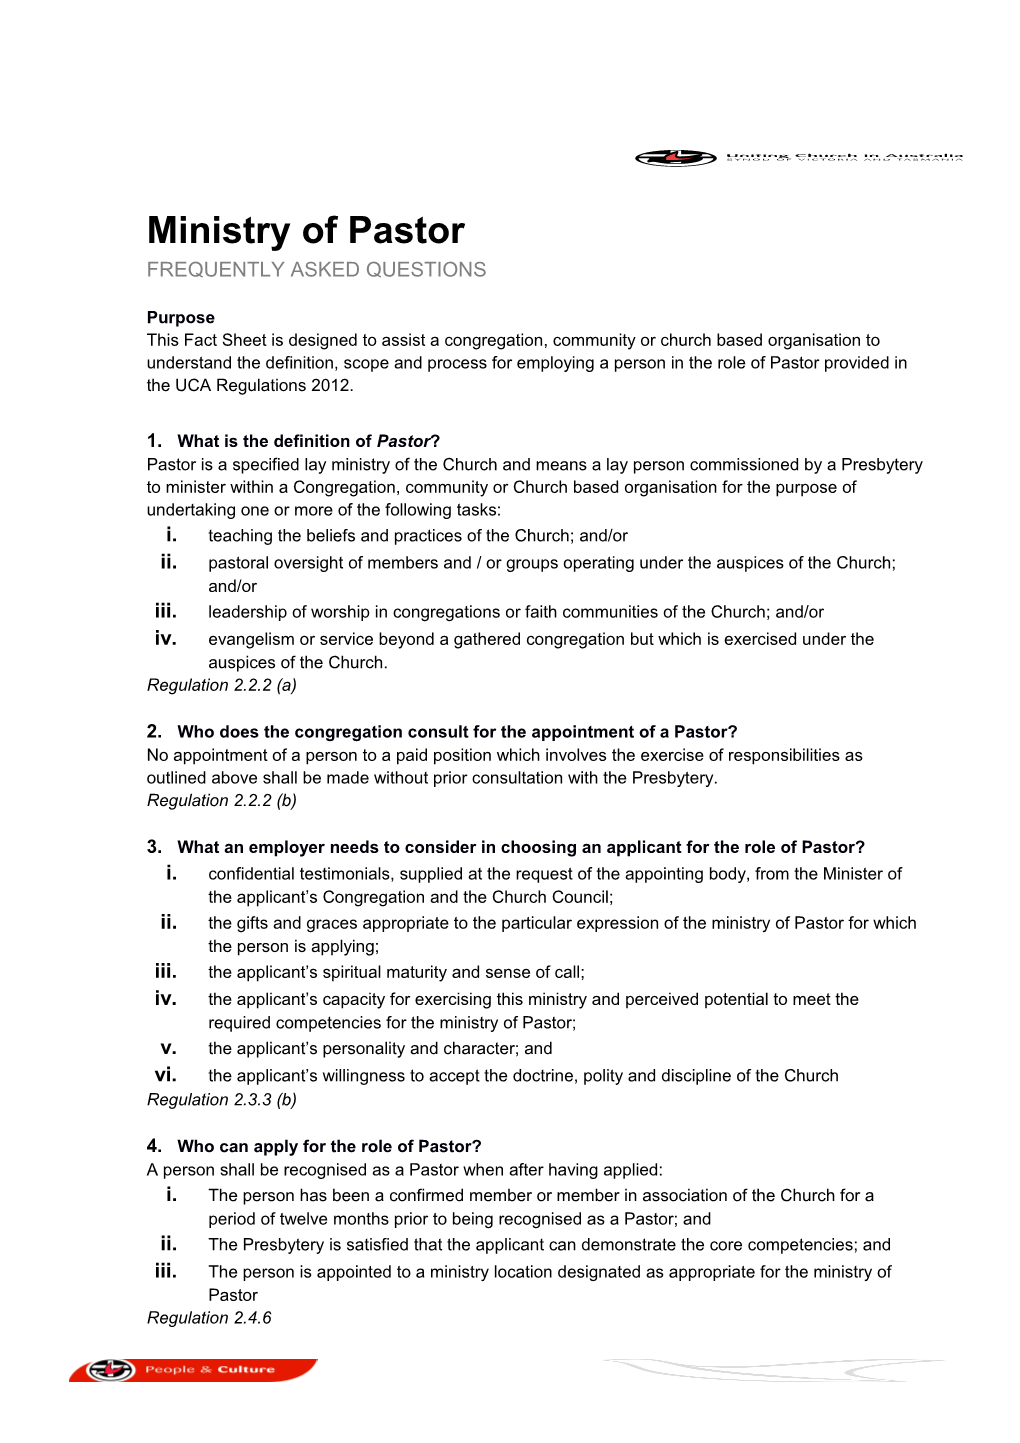 Ministry of Pastor - FAQ